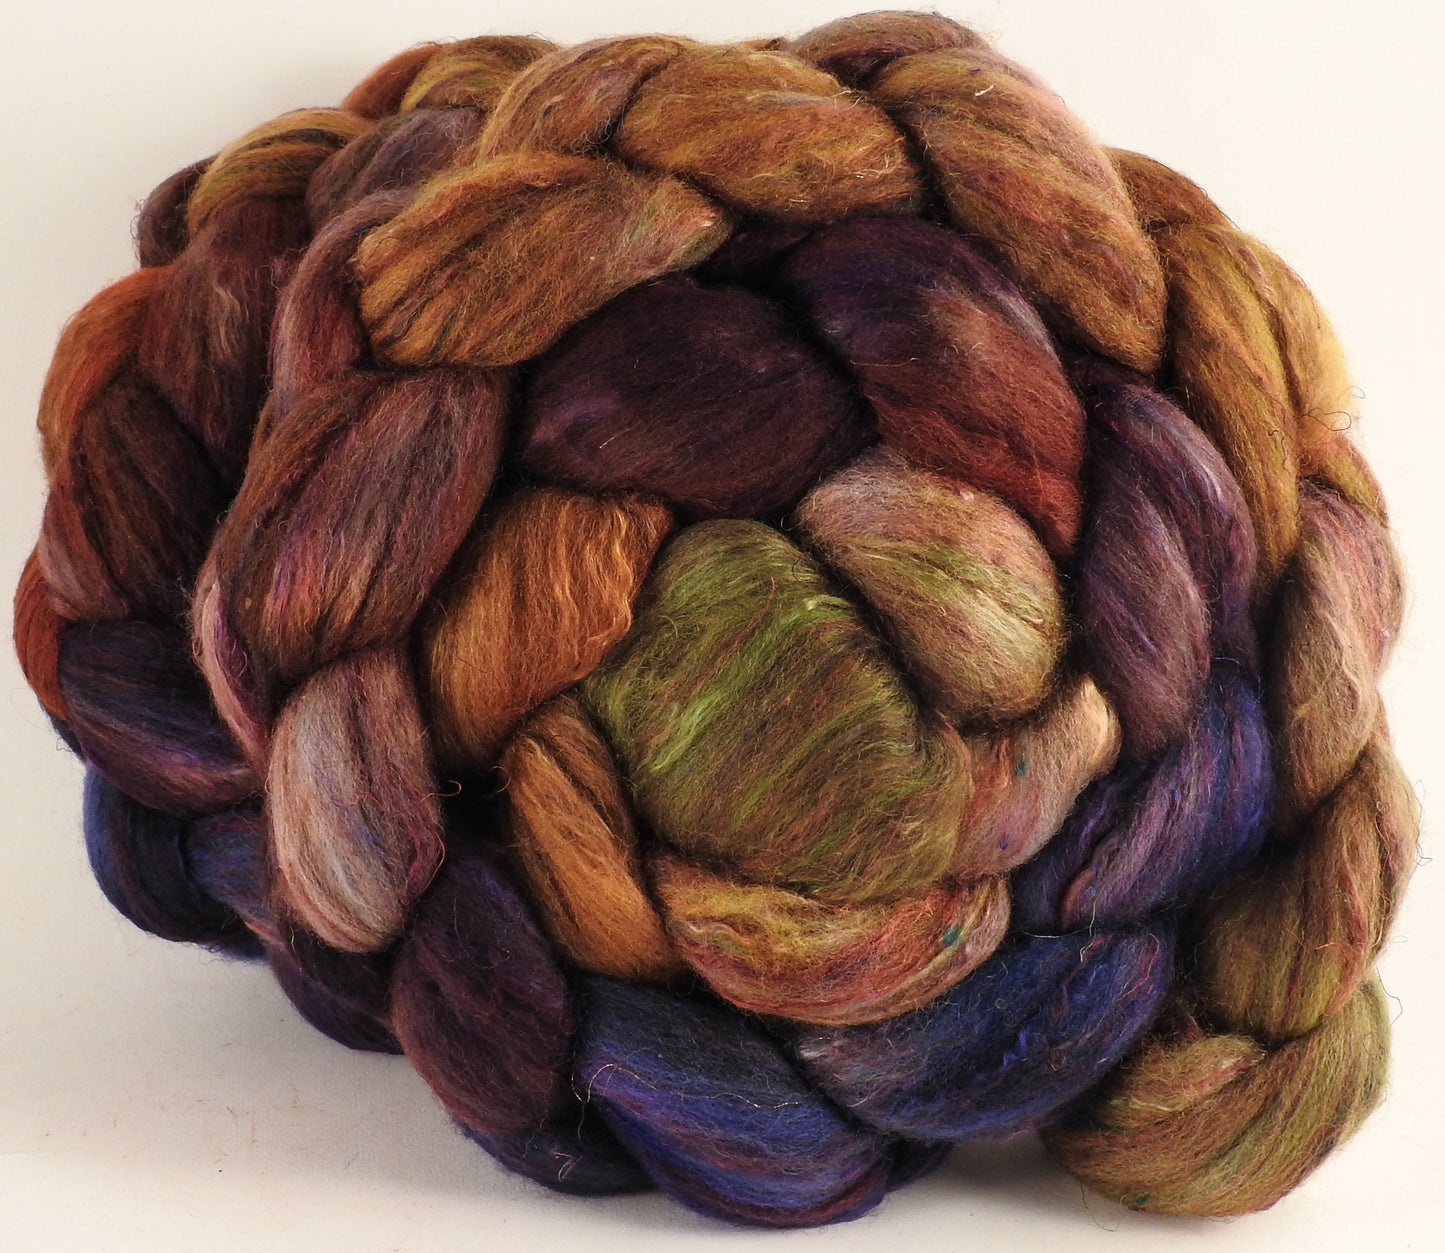 Batt in a Braid #39 - Toulouse - Falkland Merino/ Mulberry Silk / Sari Silk (50/25/25) - Inglenook Fibers